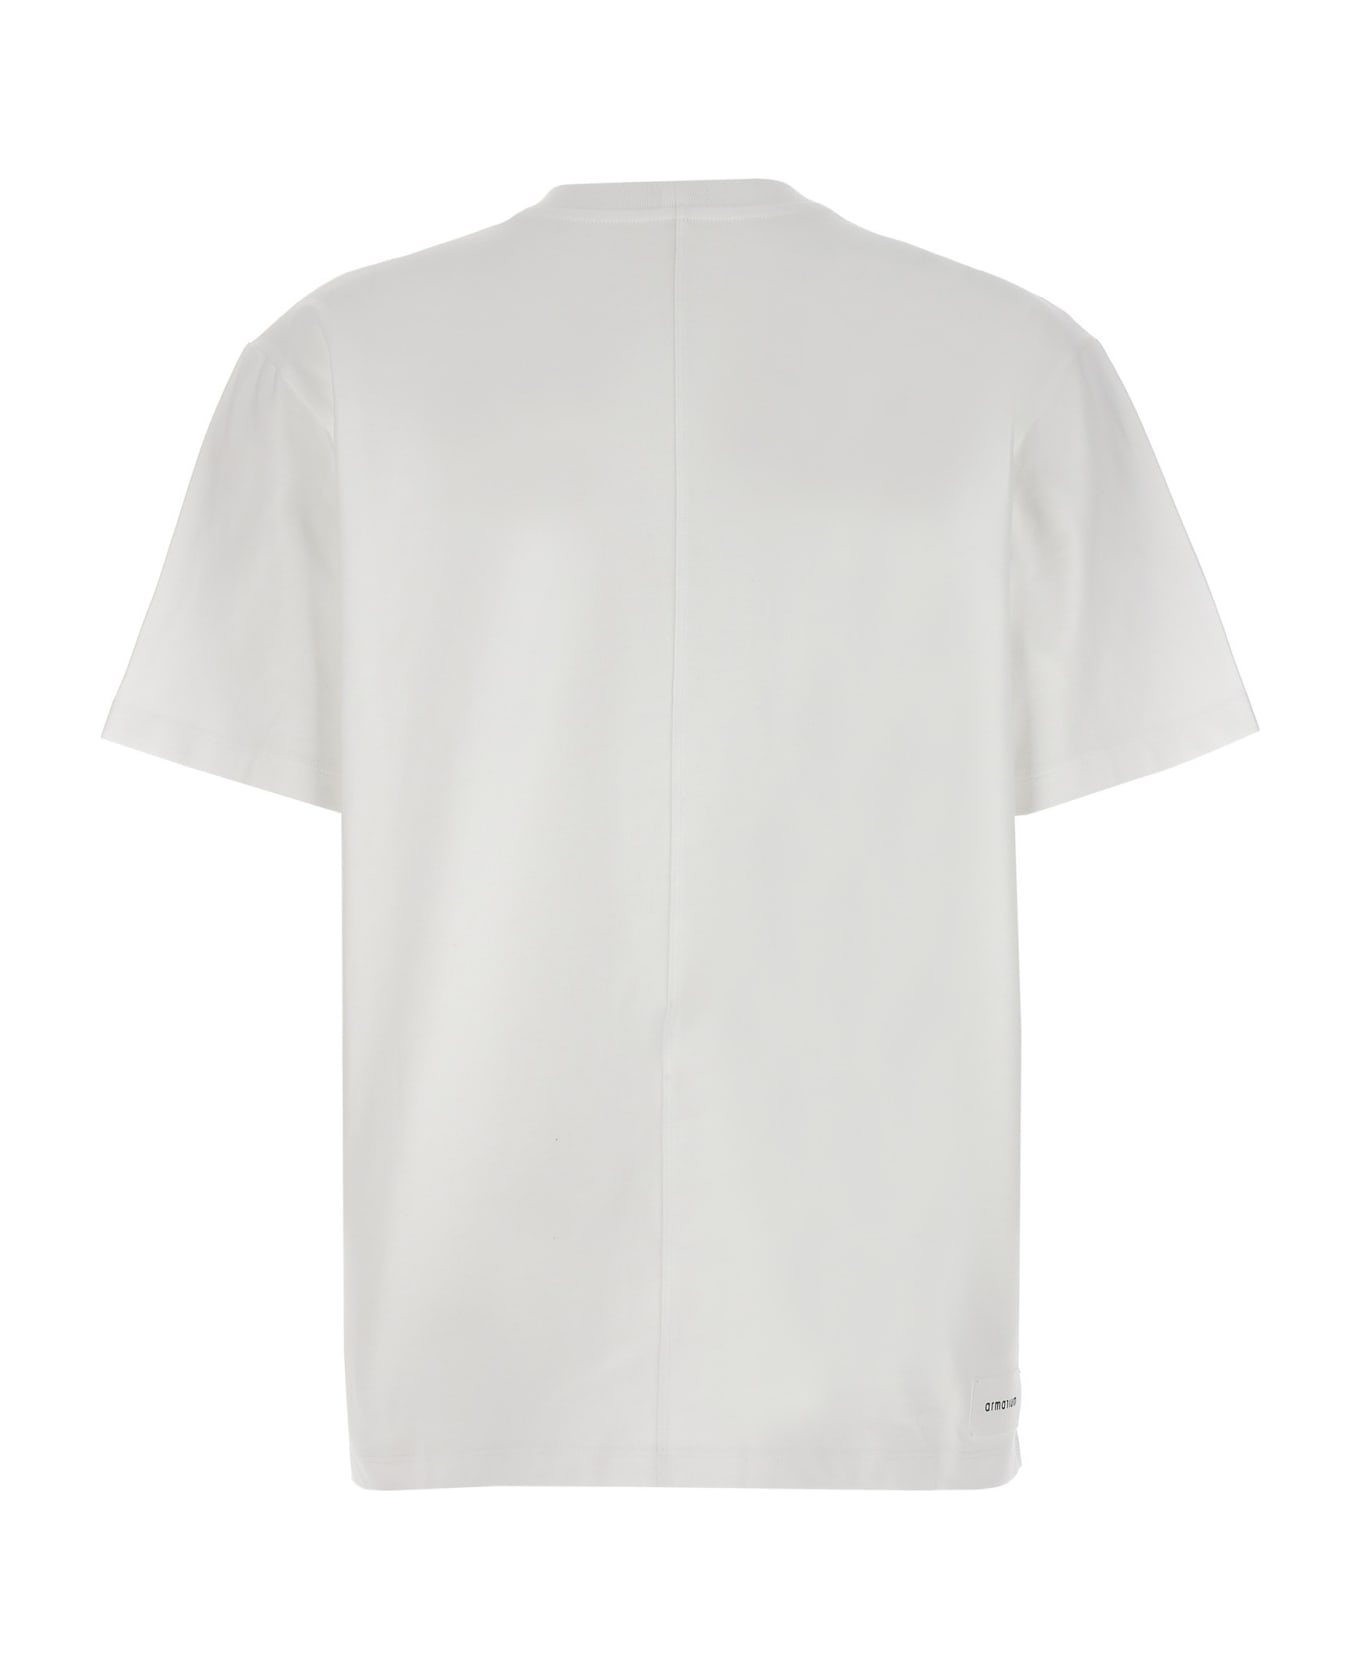 Armarium 'vittoria' T-shirt - White Tシャツ